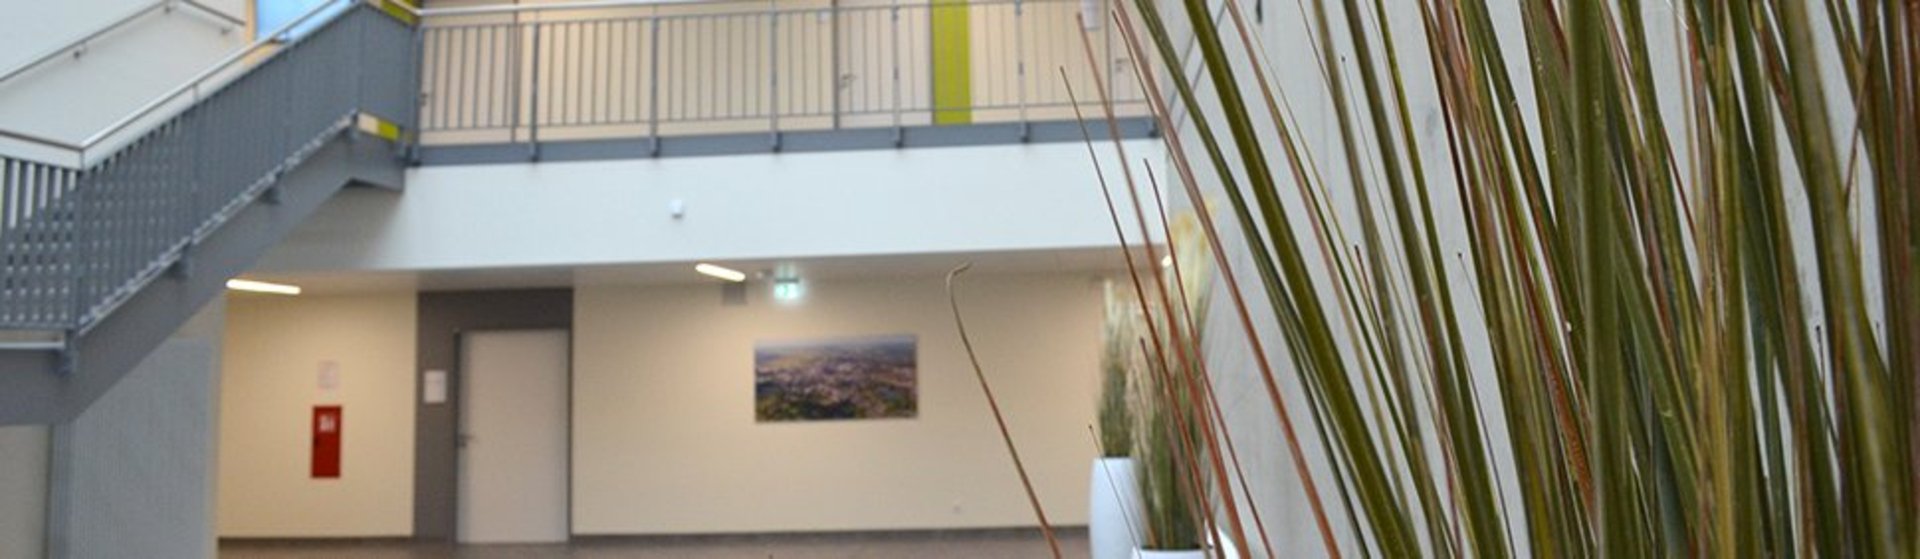 Klinikum Itzehoe Akademie - Foyer